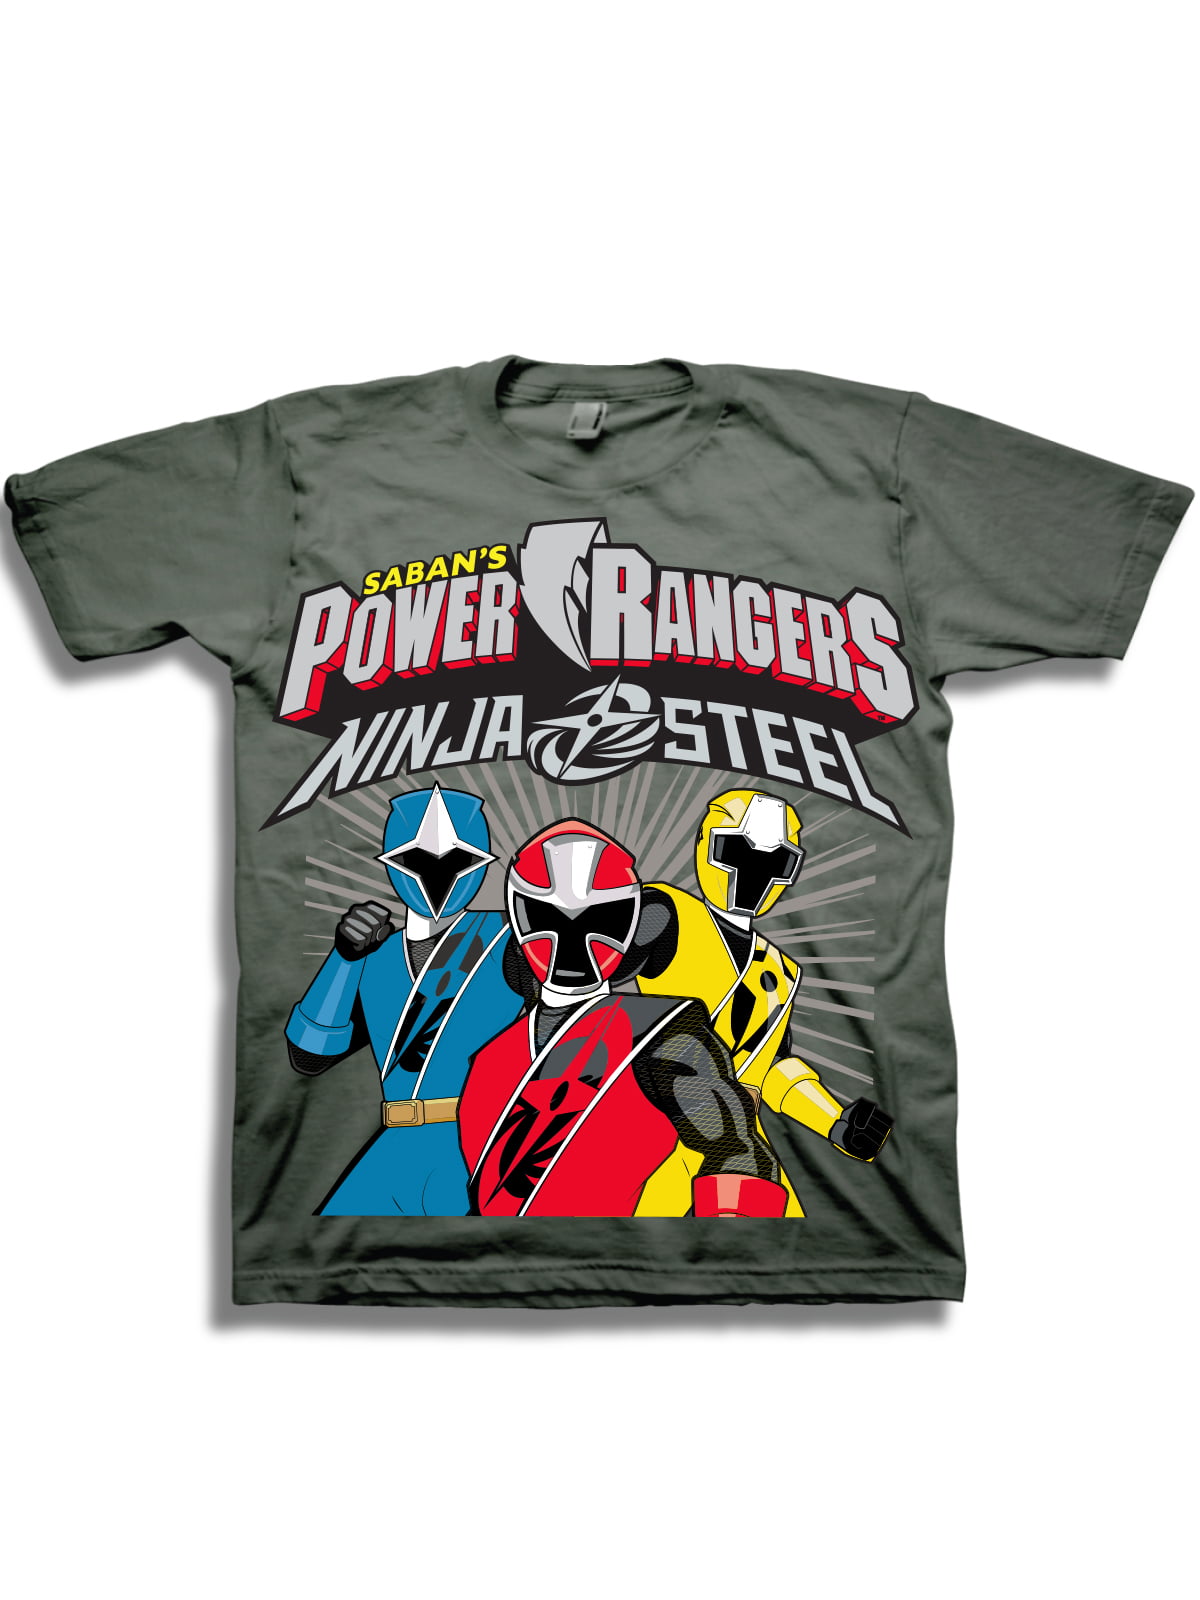 power rangers ninja steel t shirt